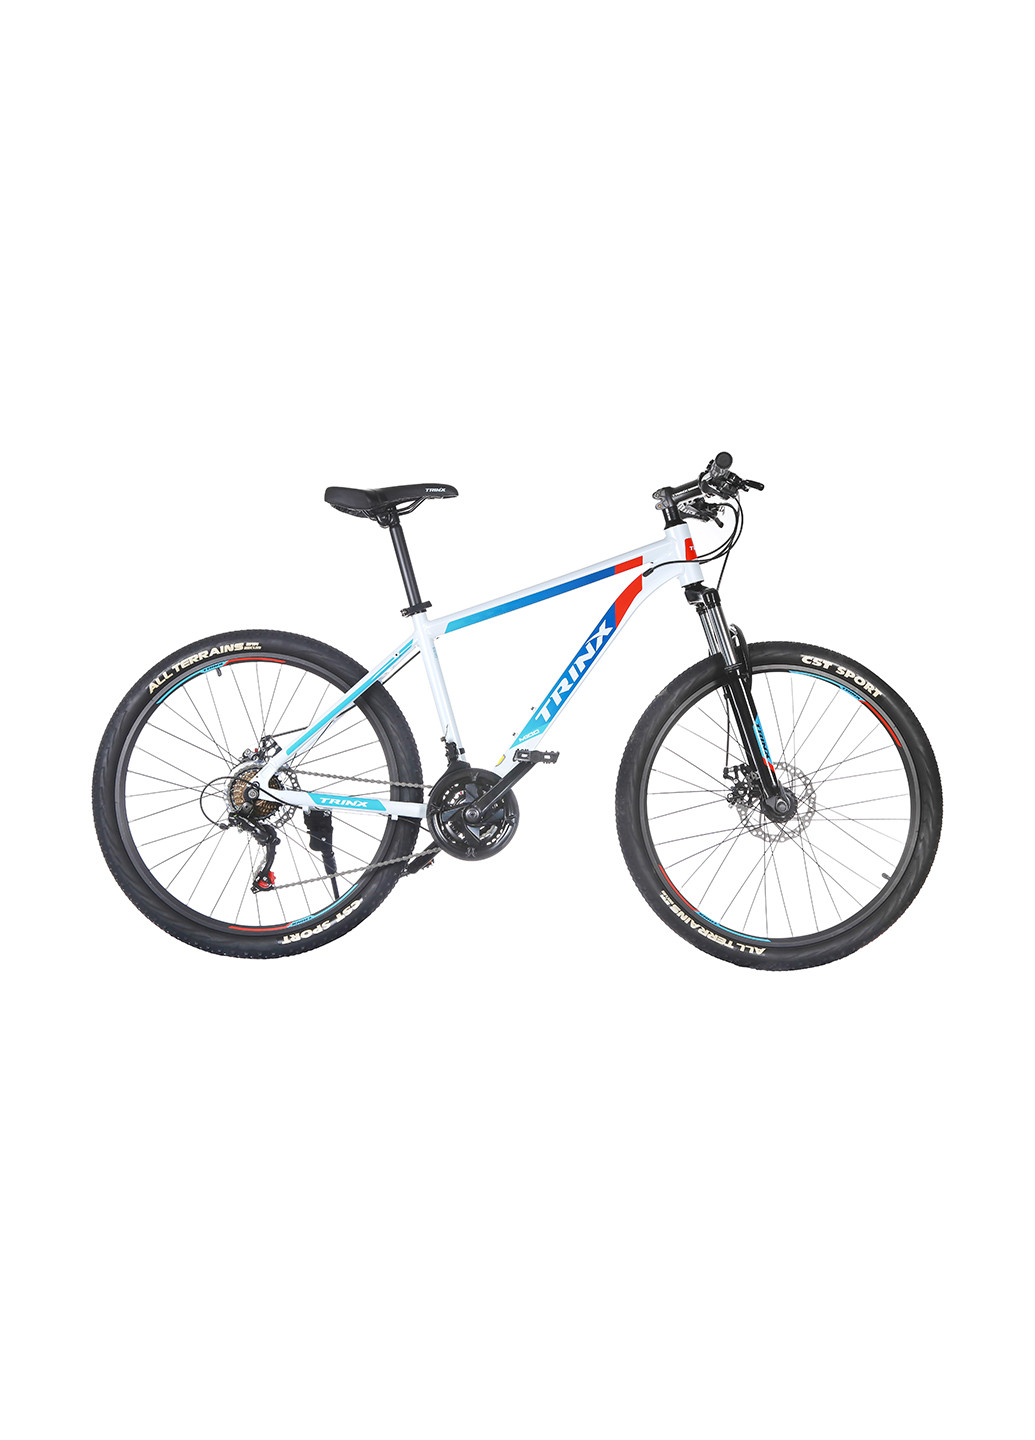 Велосипед M100 26 "x17" White-Red-Blue Trinx m100 26"x17" white-red-blue (146489465)